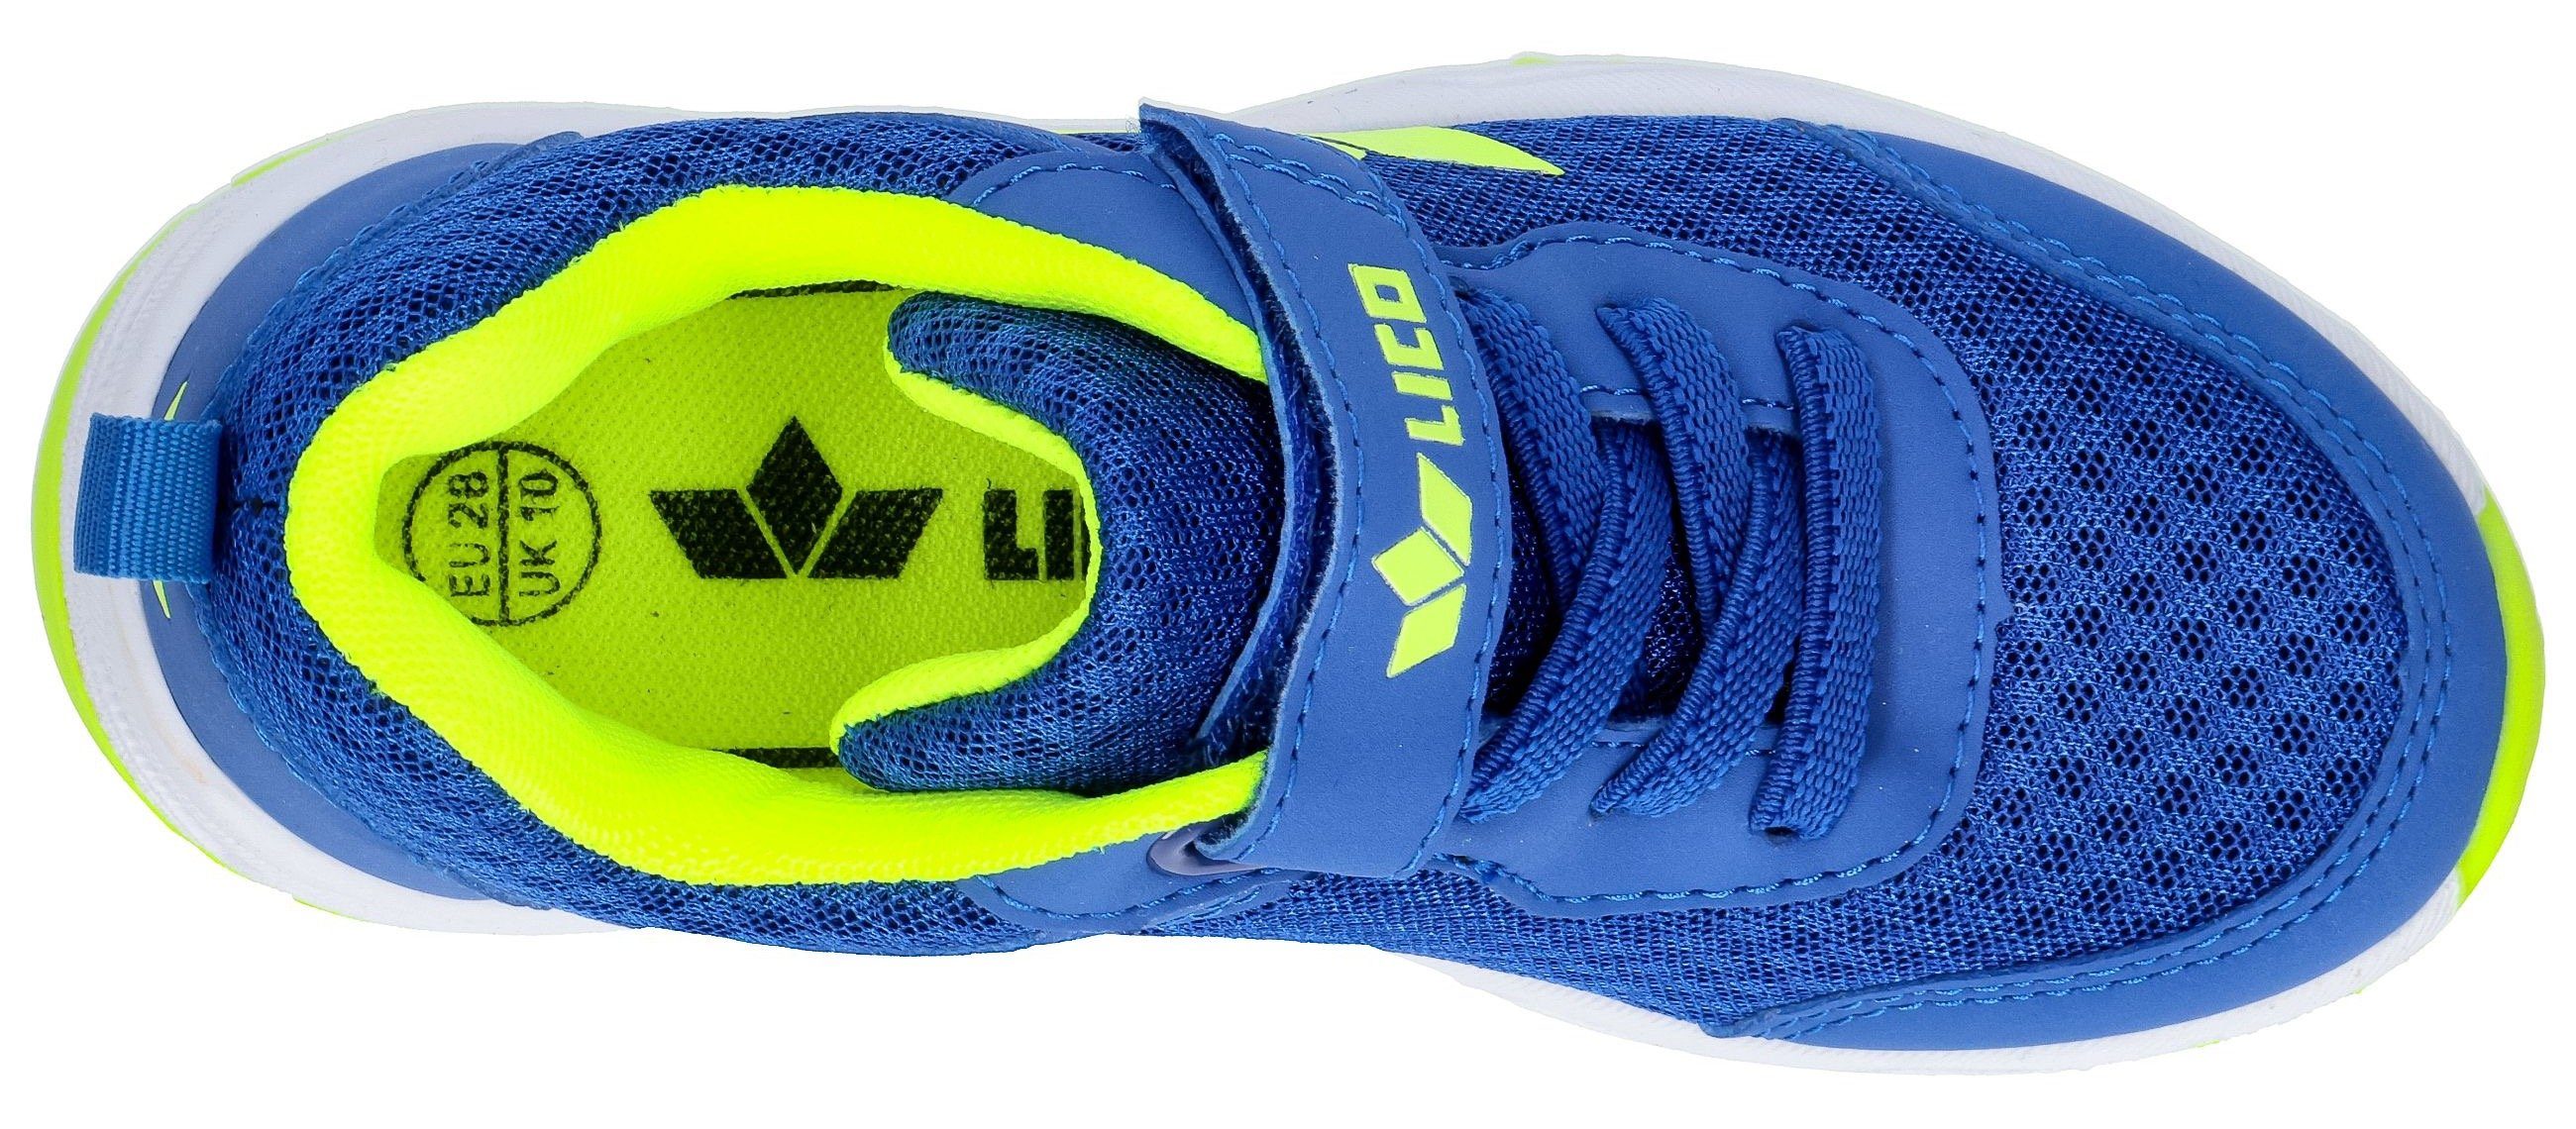 Lico Mika VS WMS Wechselfußbett mit blau/lemon Sneaker